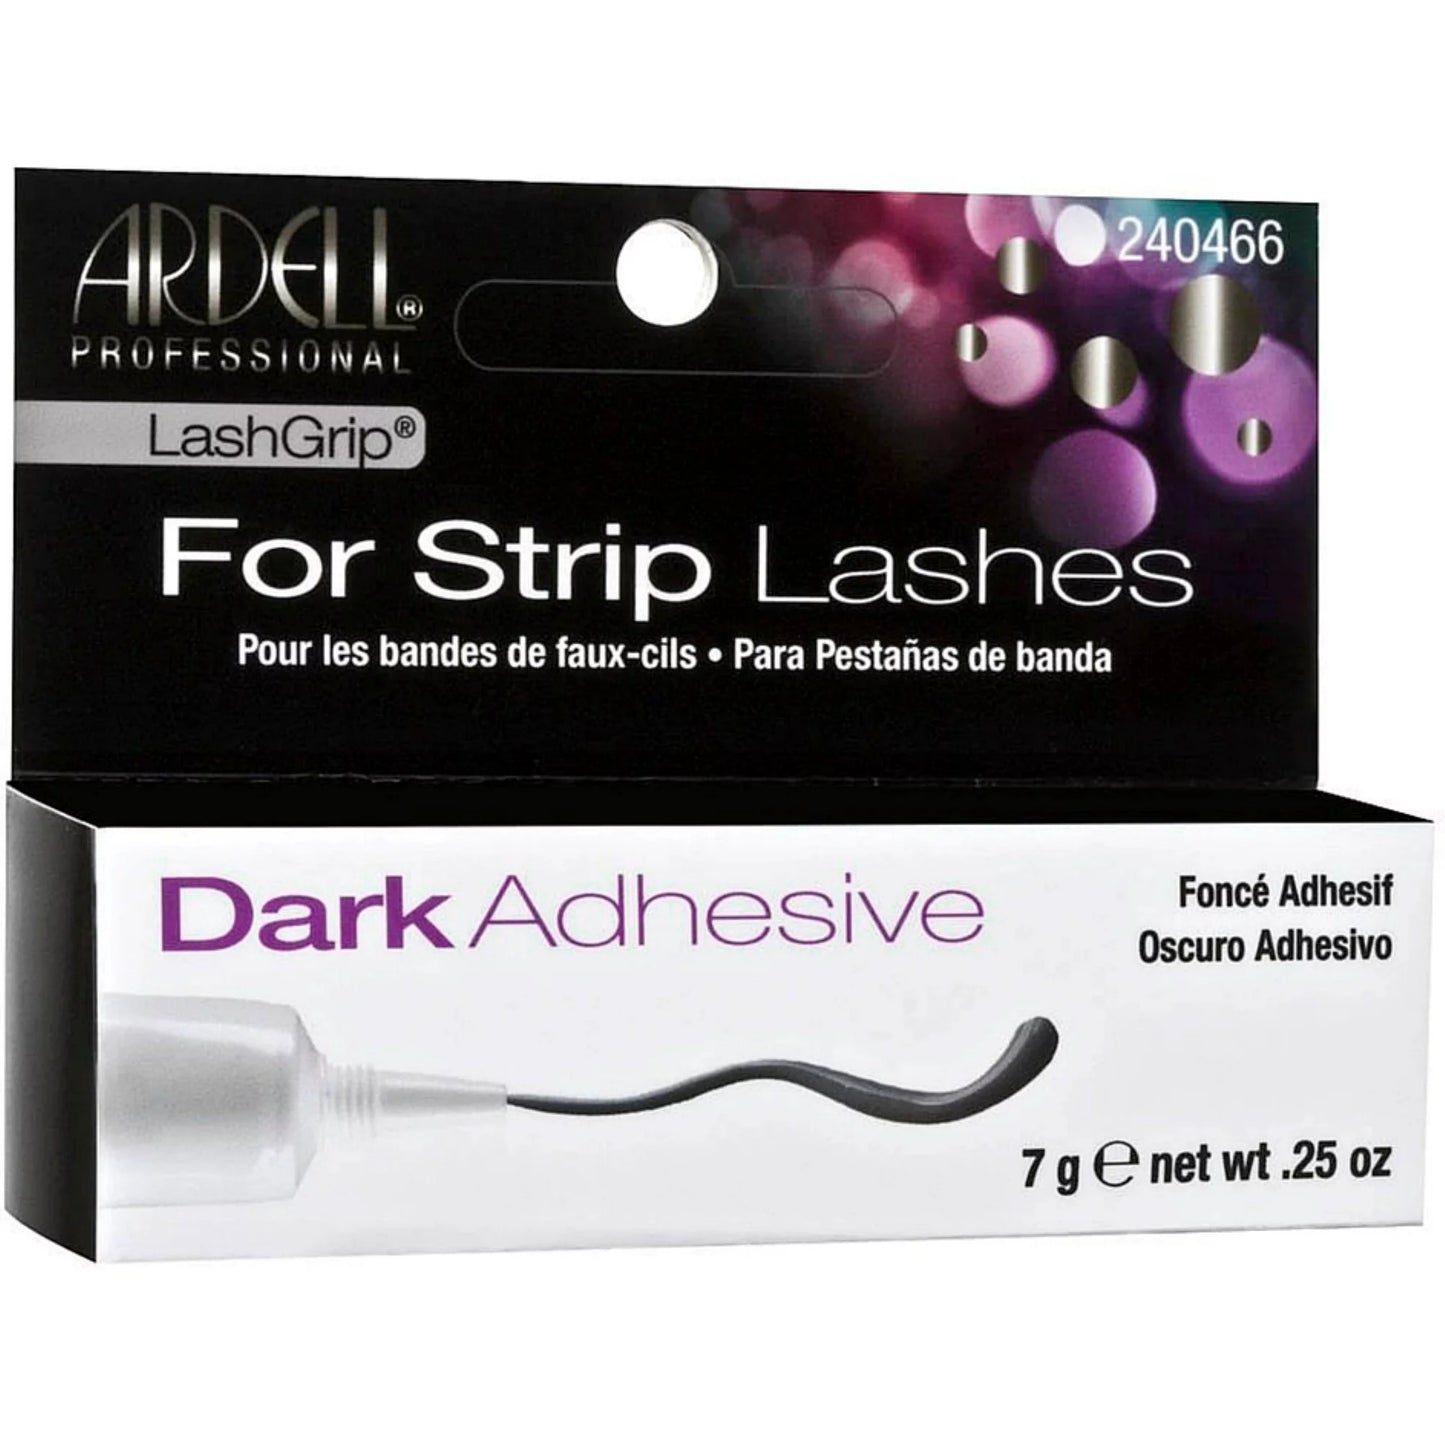 Ardell LashGrip Strip lashes Adhesive